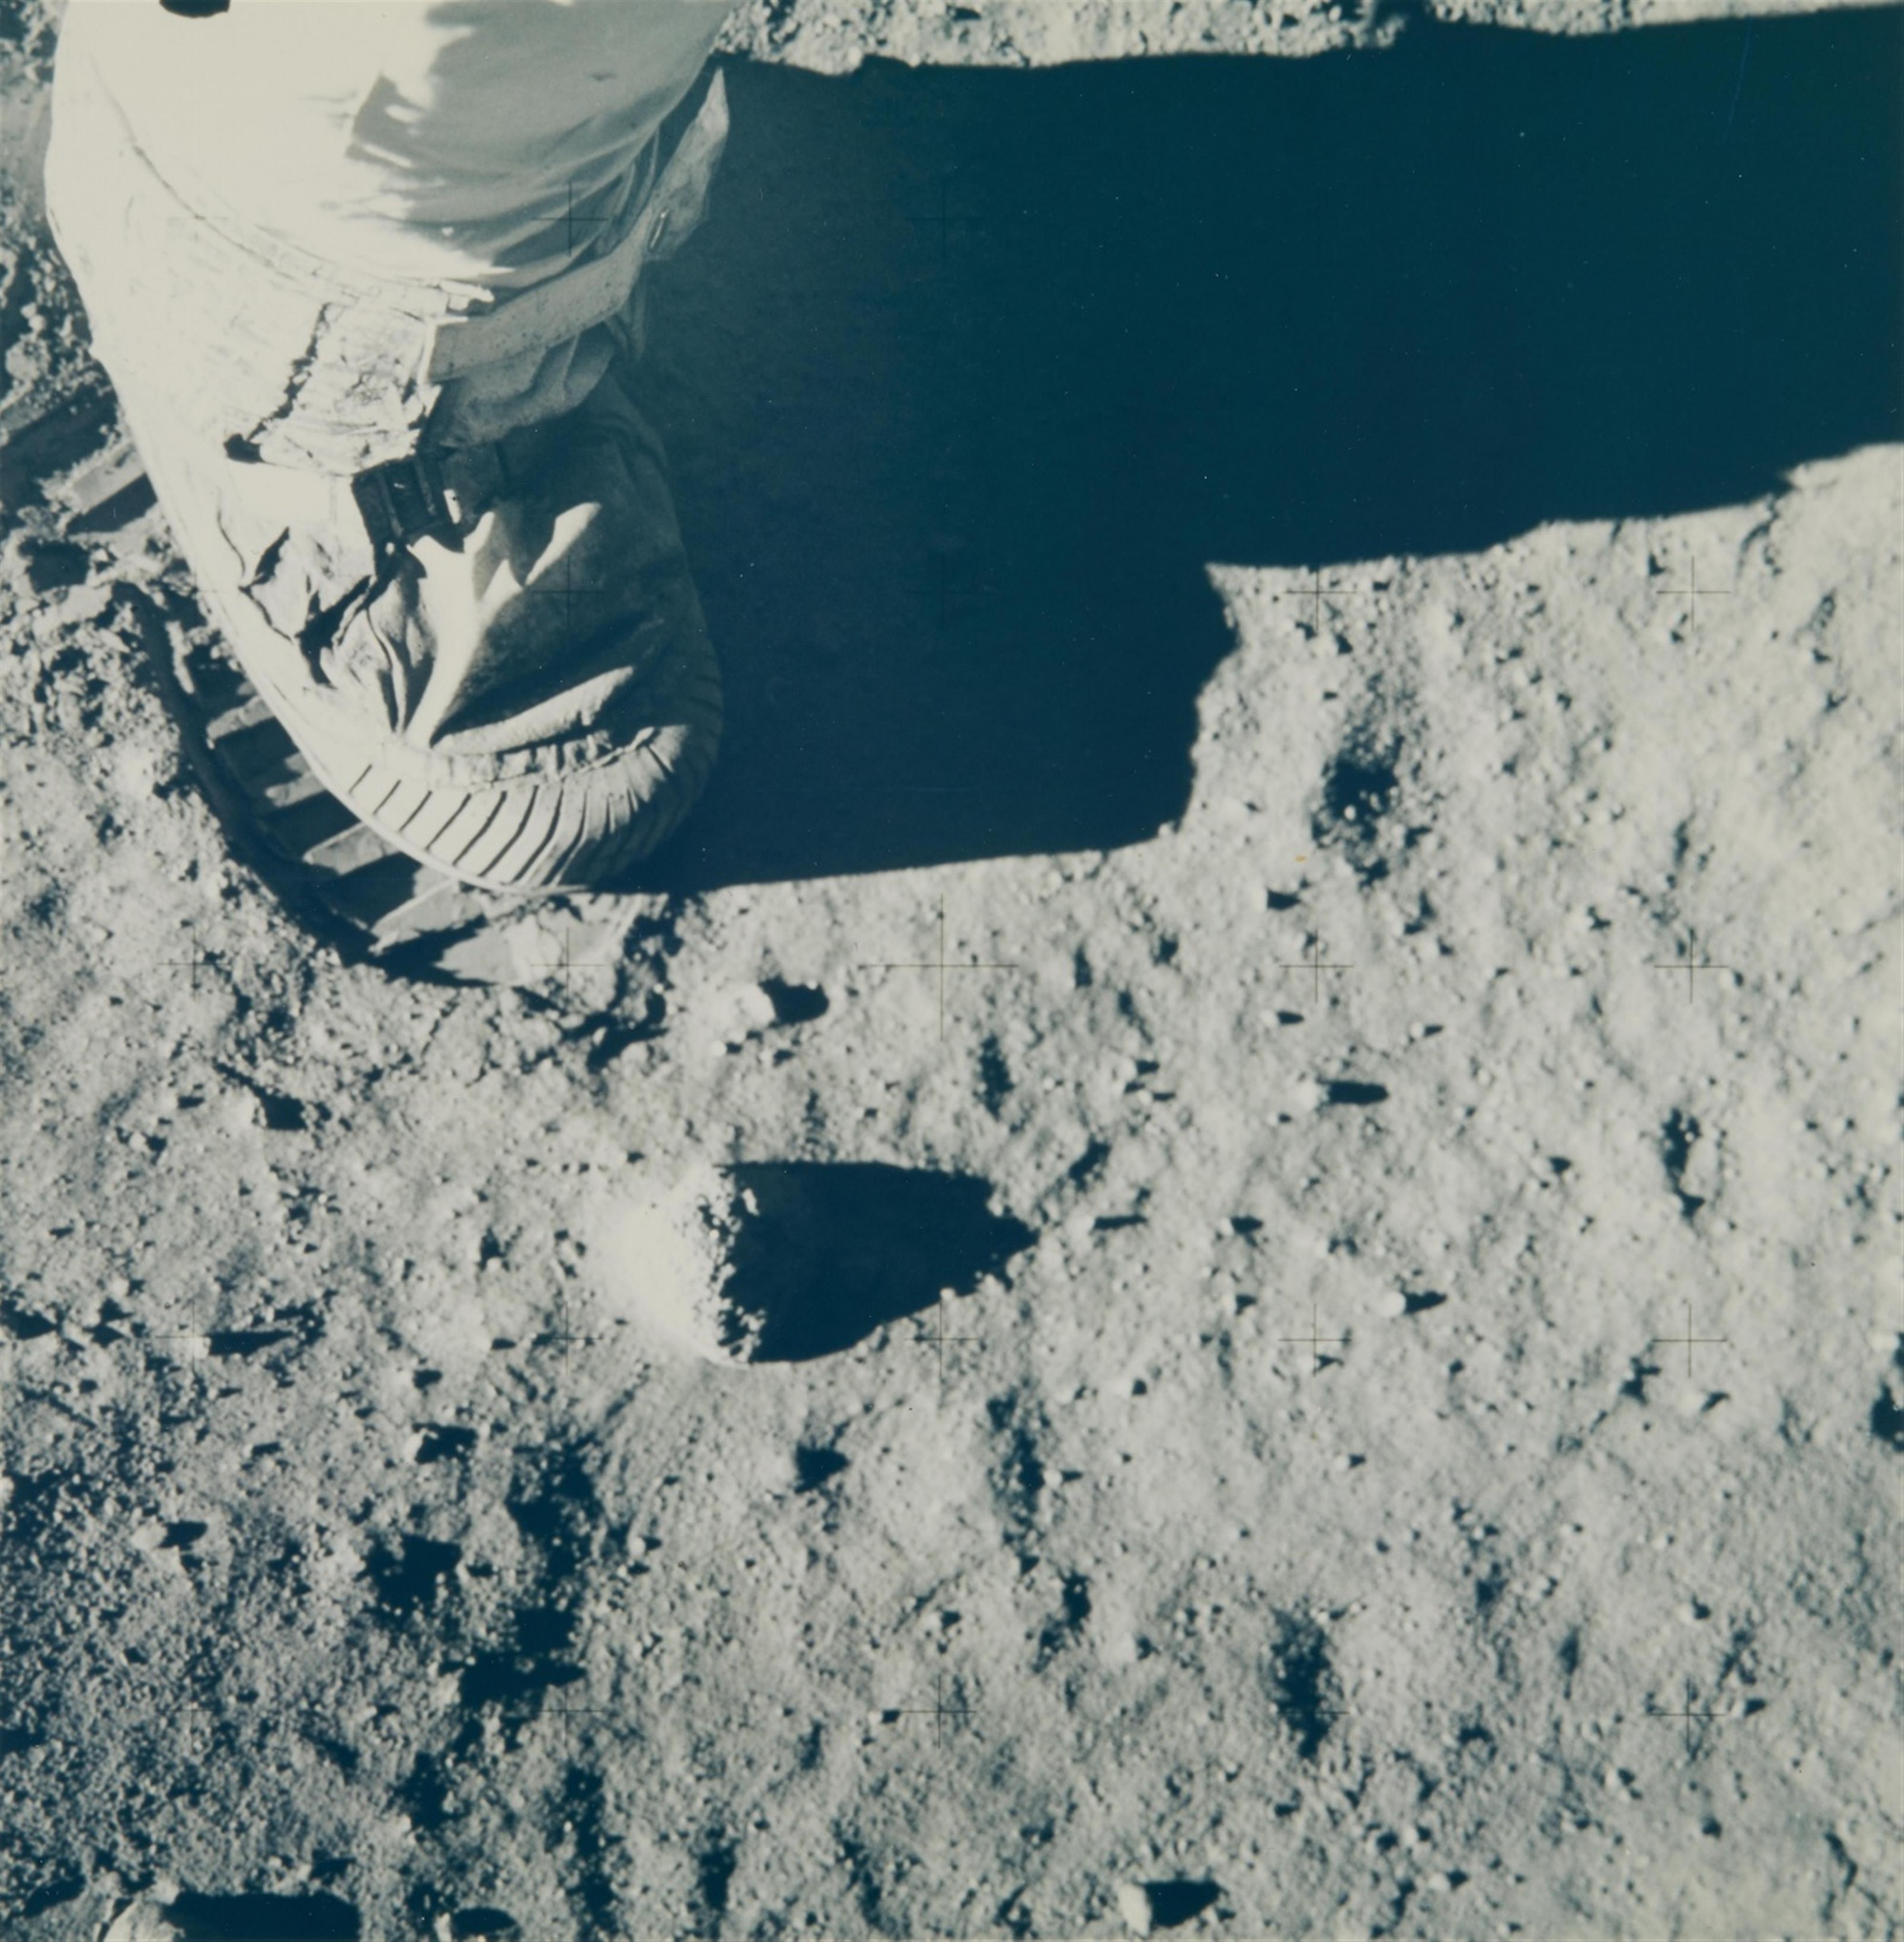 NASA - Aldrin's boot and footprint in lunar soil, Apollo 11 - image-1